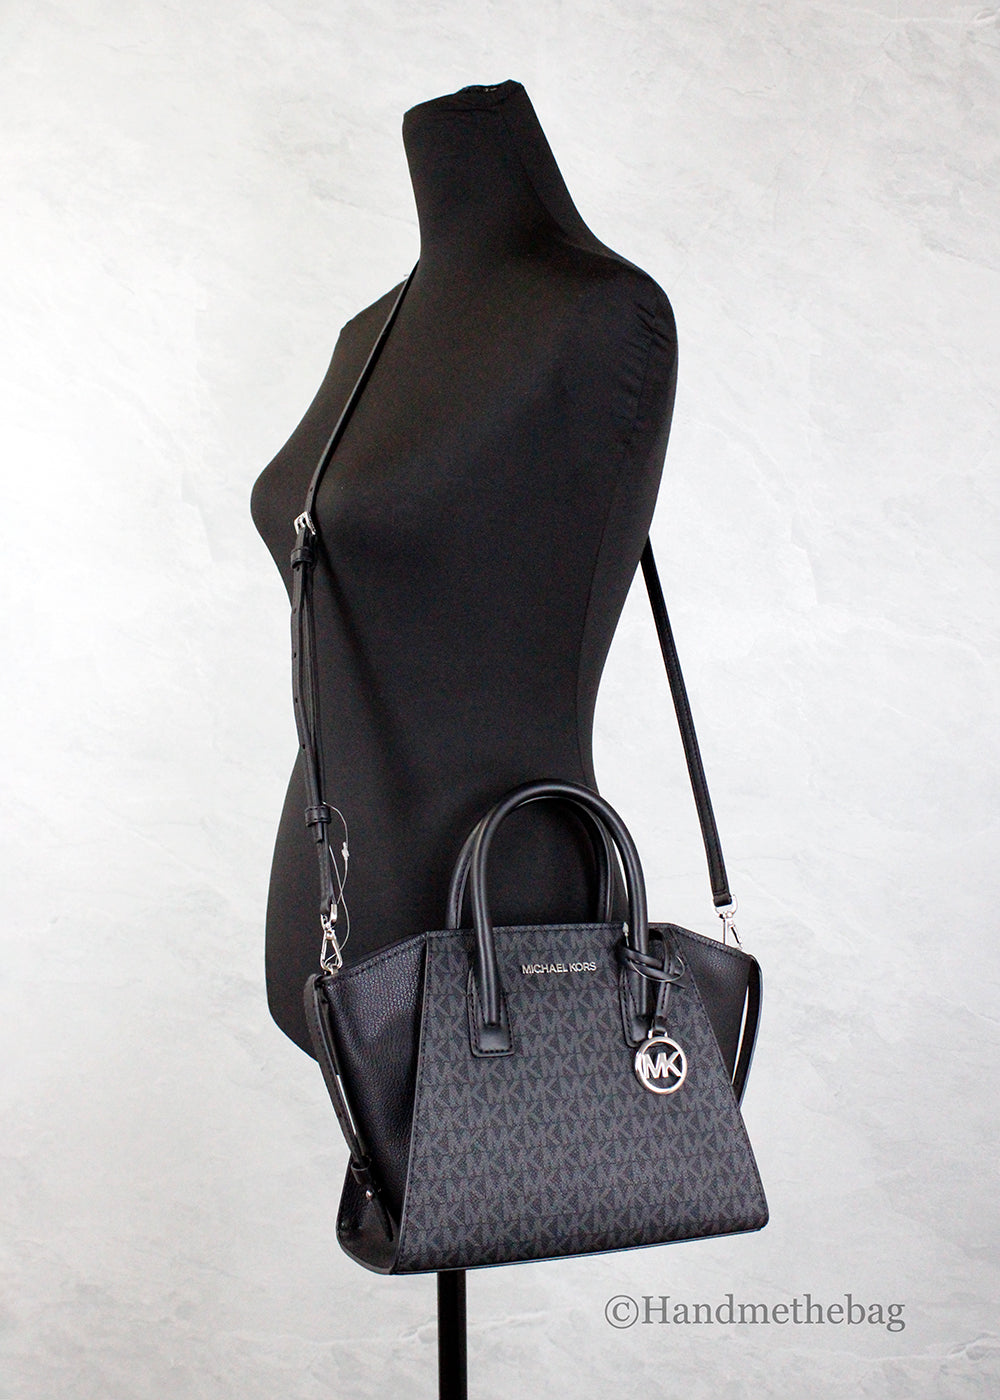 Michael Kors Avril Small Black PVC TZ Satchel Bag